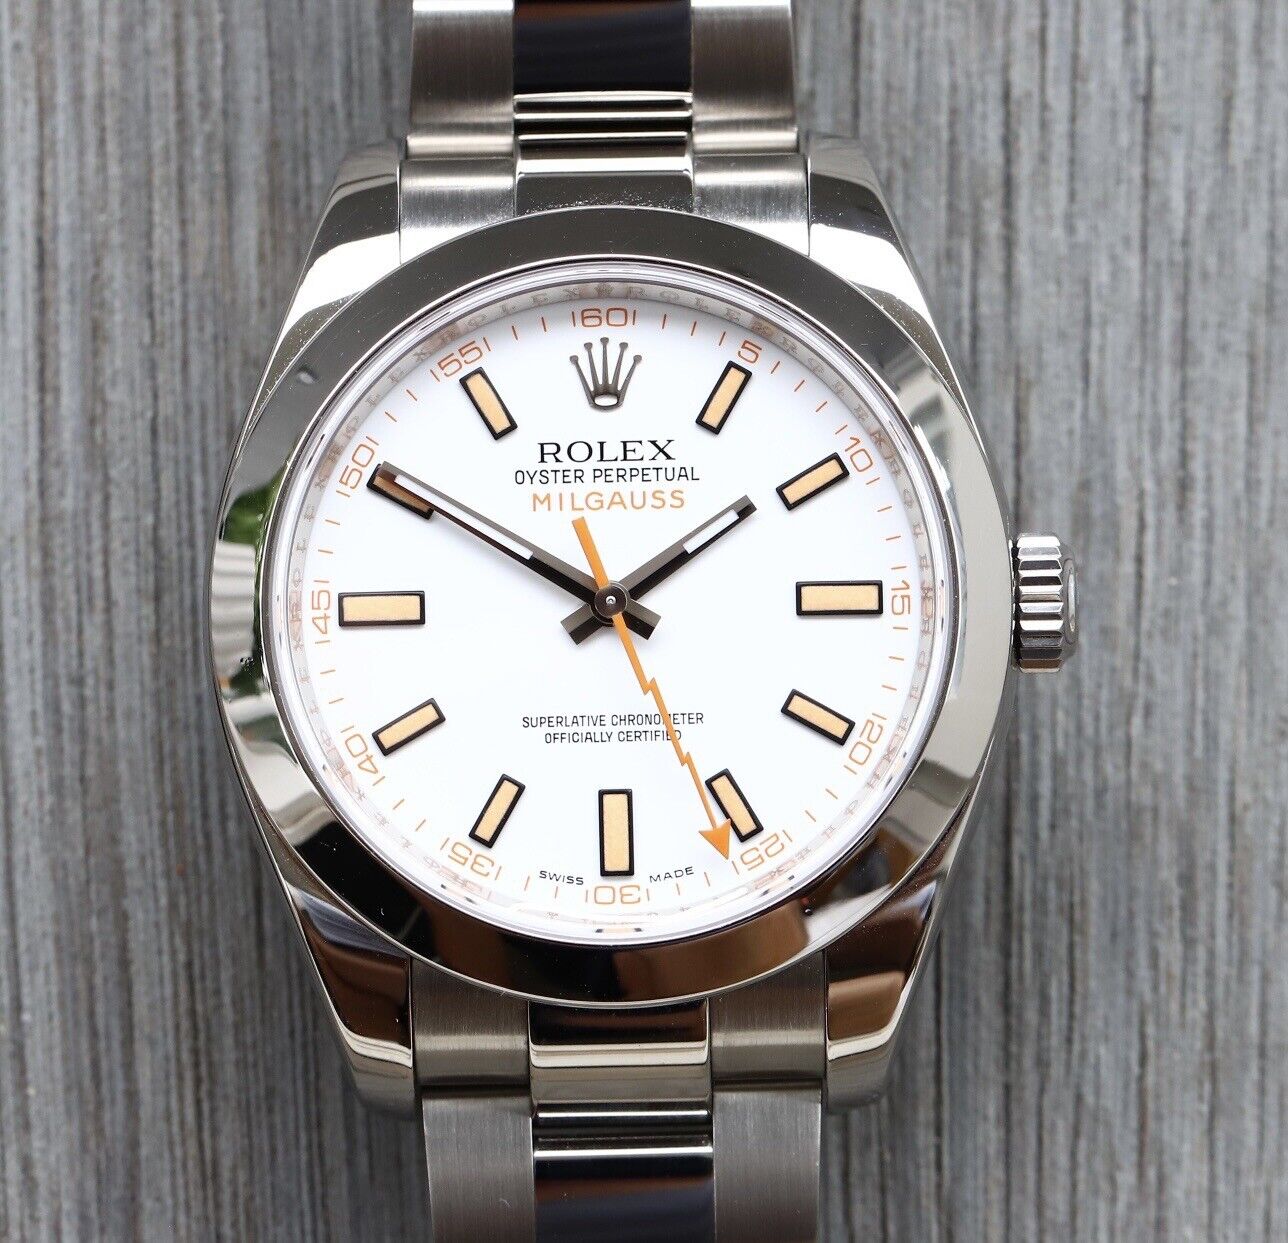 Rolex Oyster Perpetual Milgauss 116400 - 2009